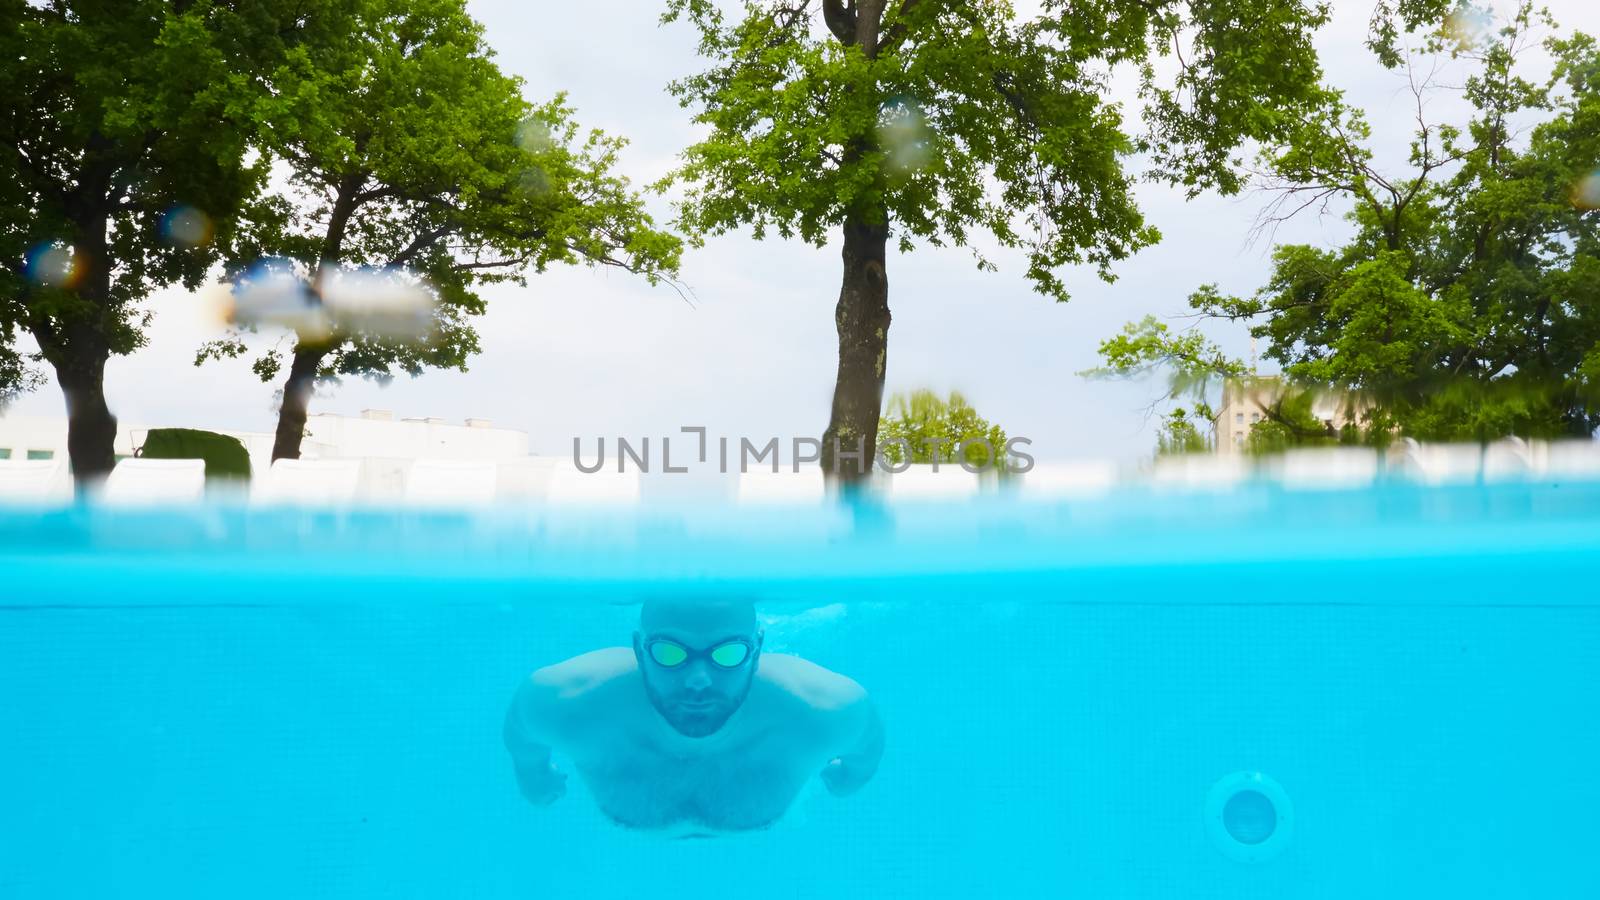 Swimmer Under Water in Pool by sarymsakov